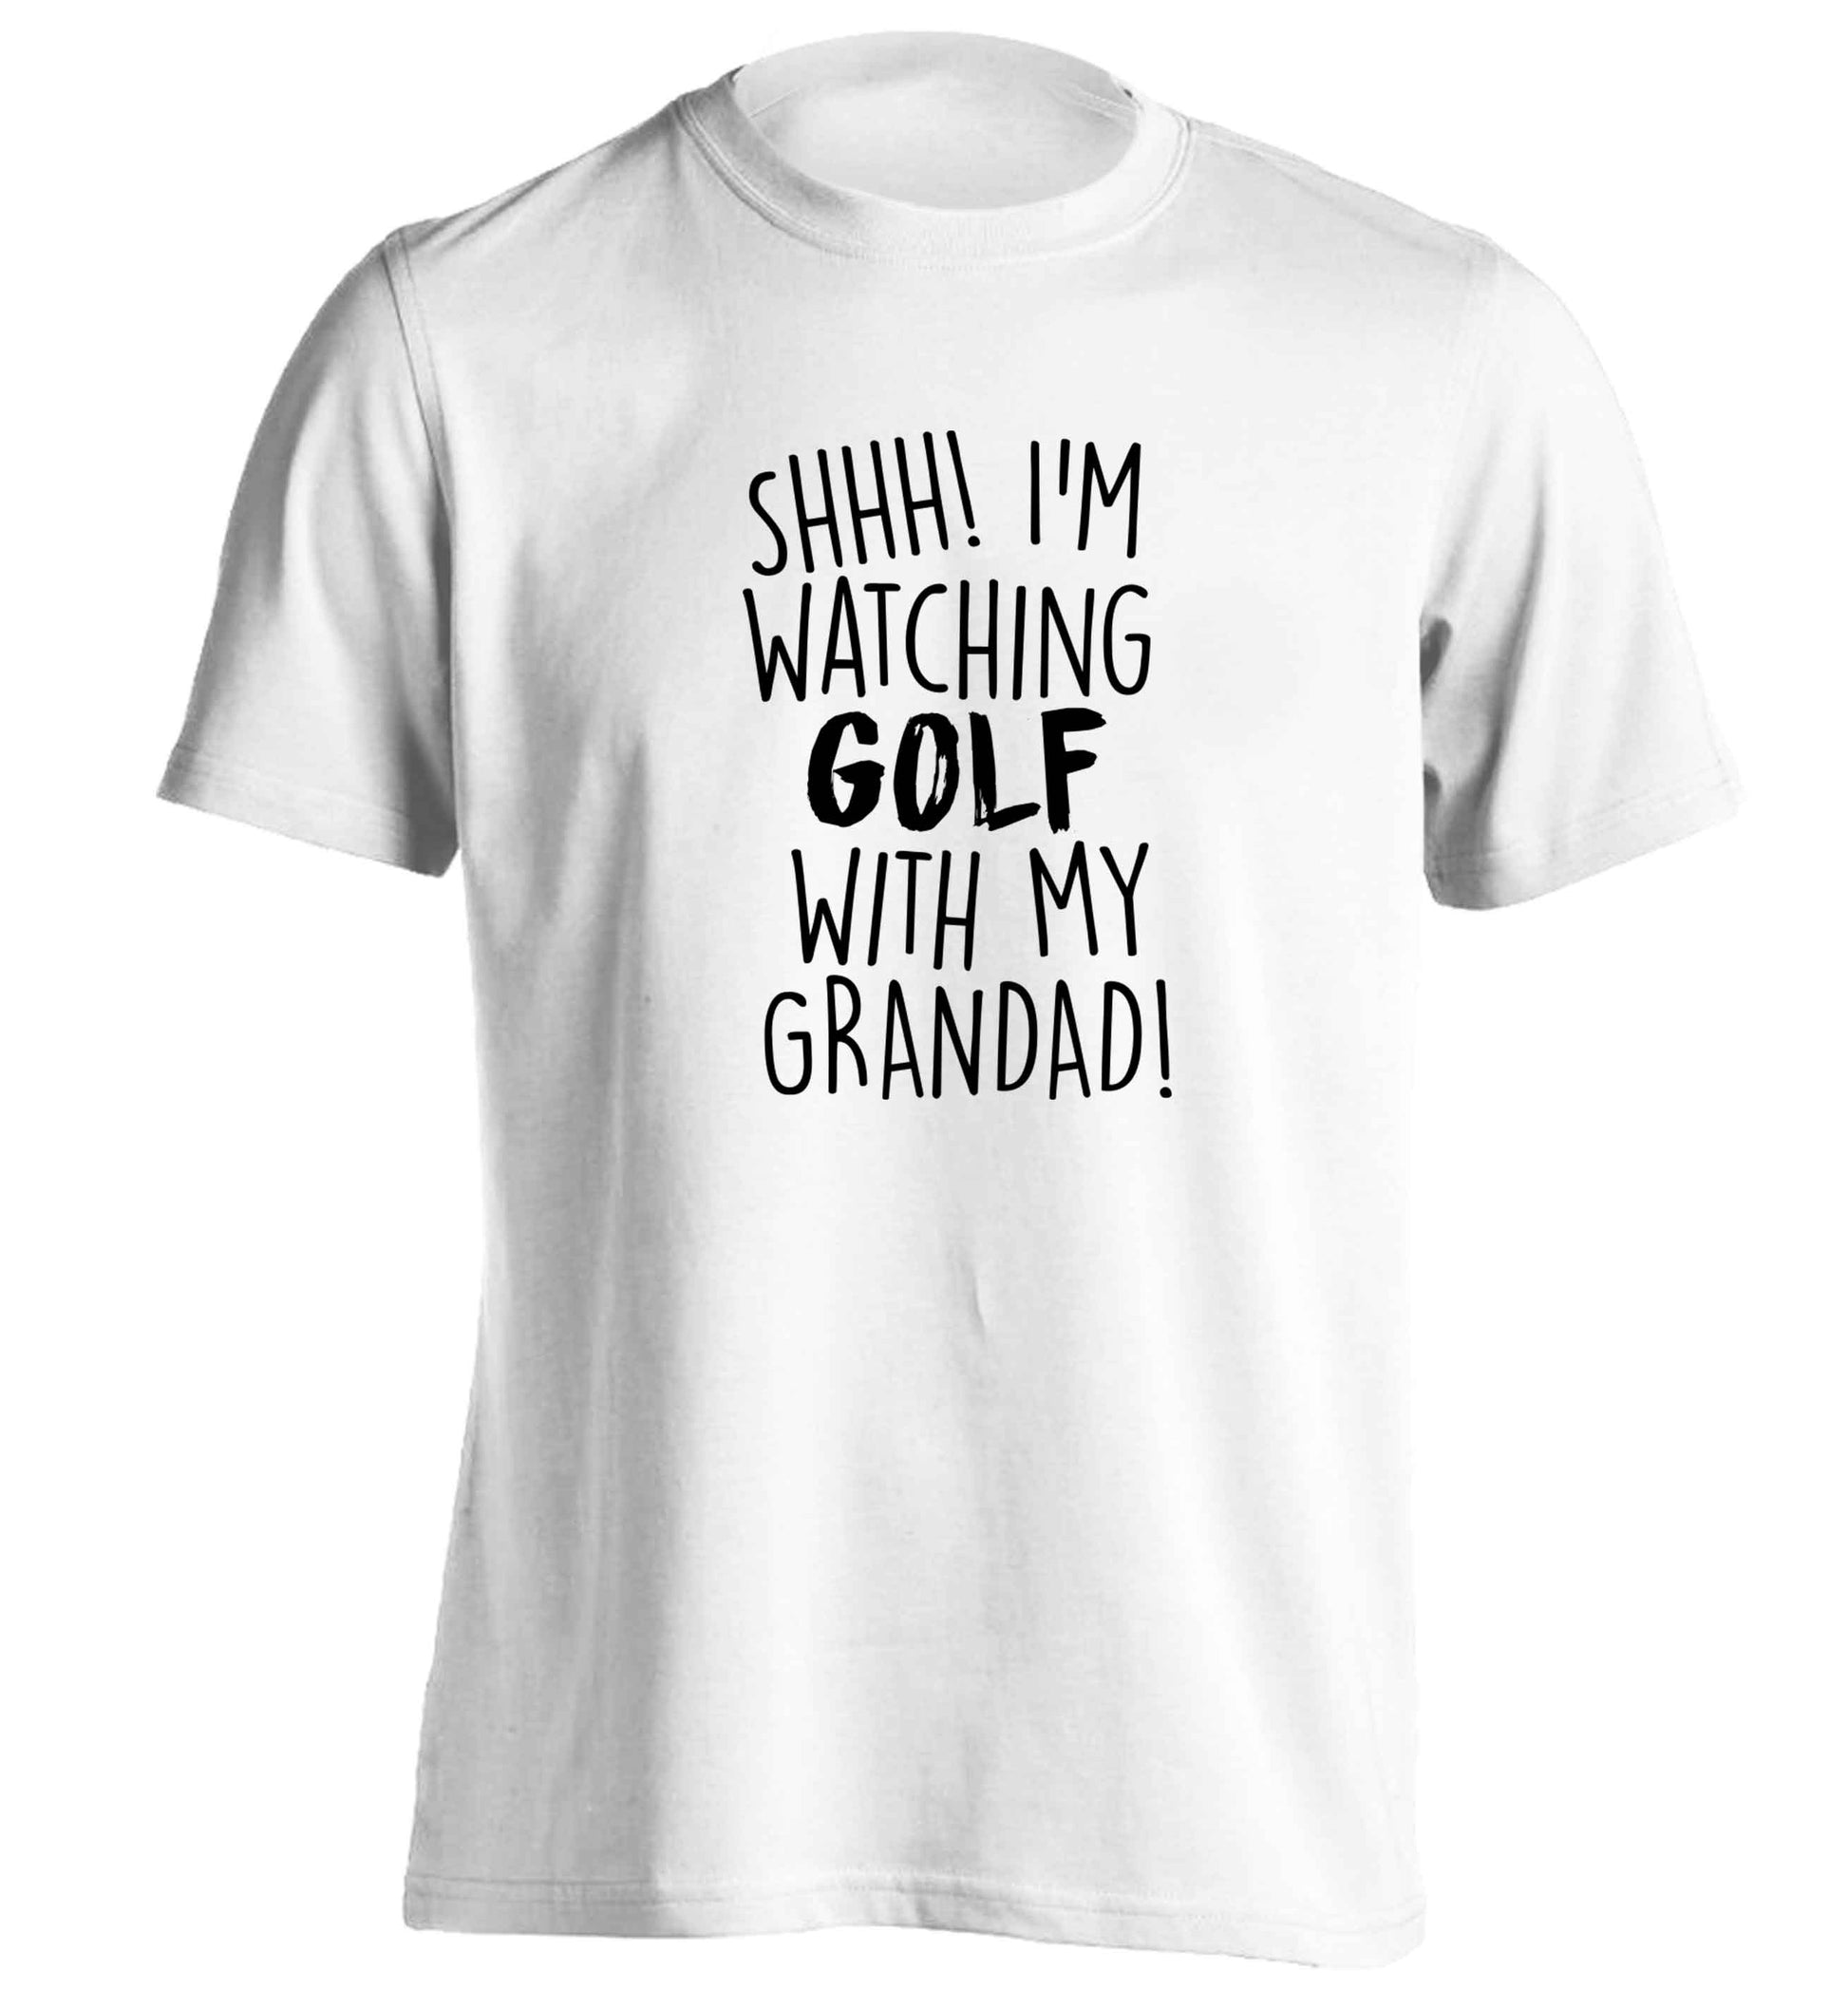 Shh I'm watching golf with my grandad adults unisex white Tshirt 2XL